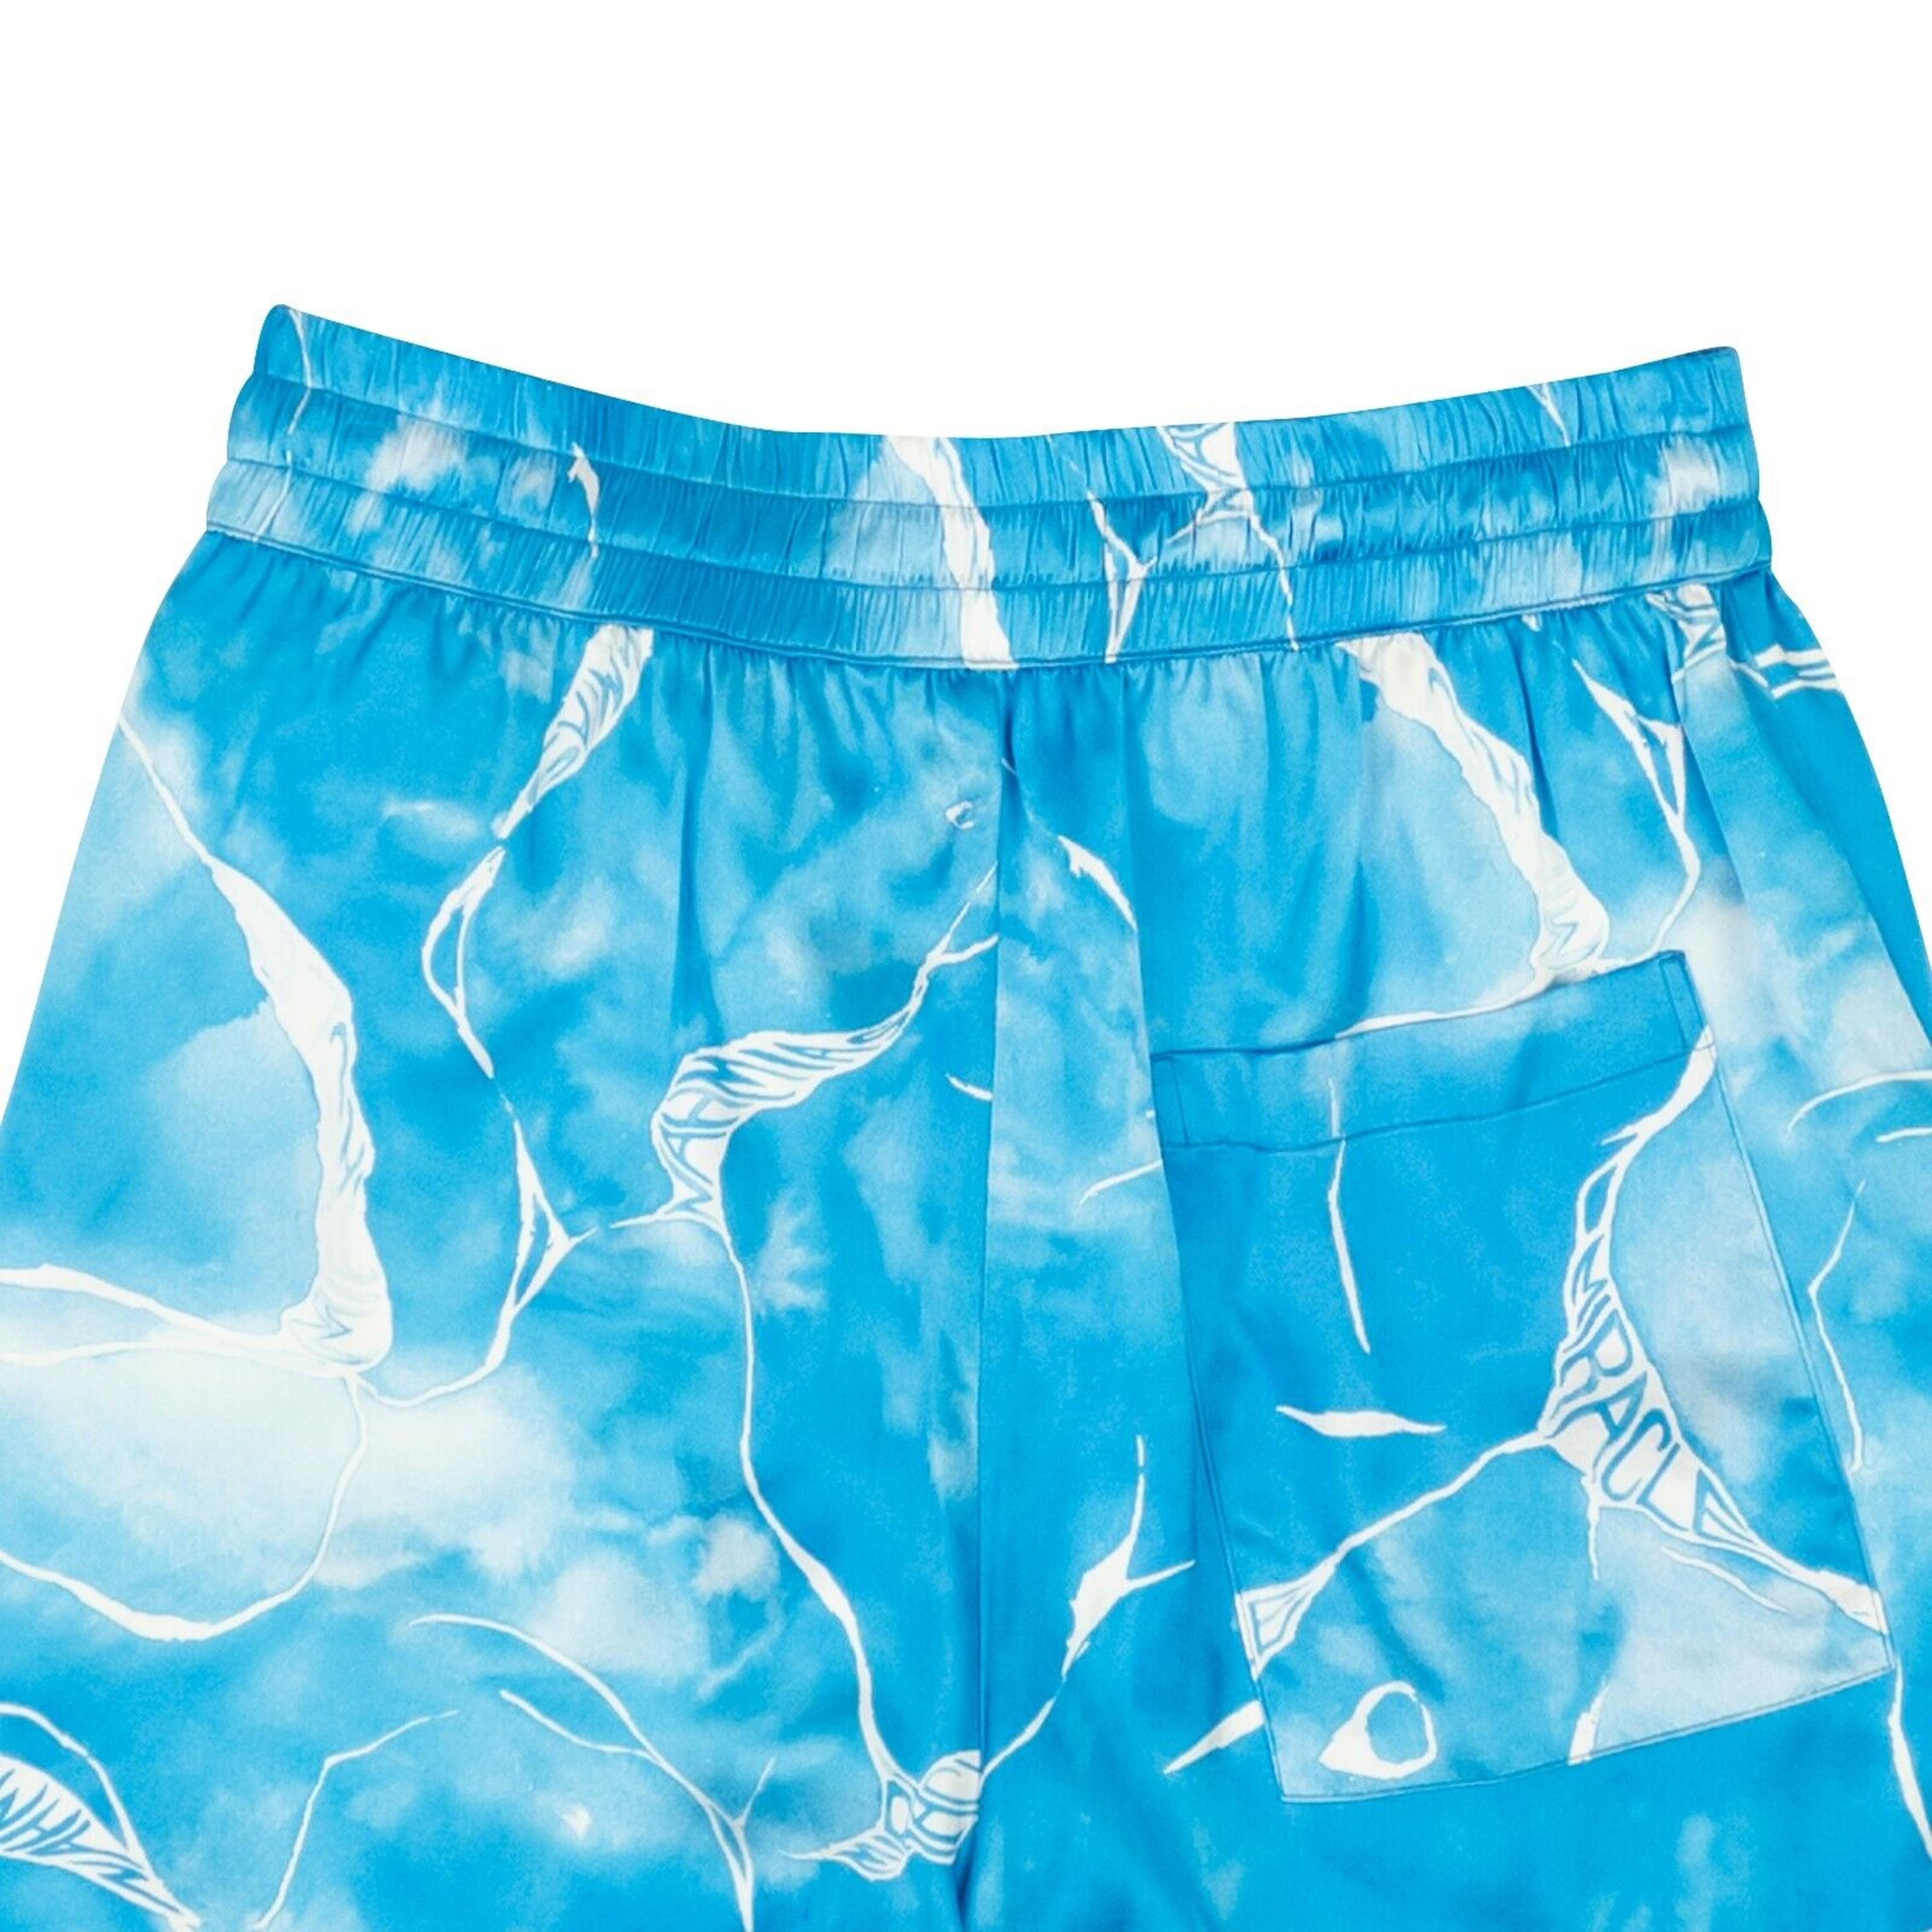 Alternate View 3 of Blue Silk Tie Dye Printed Shorts